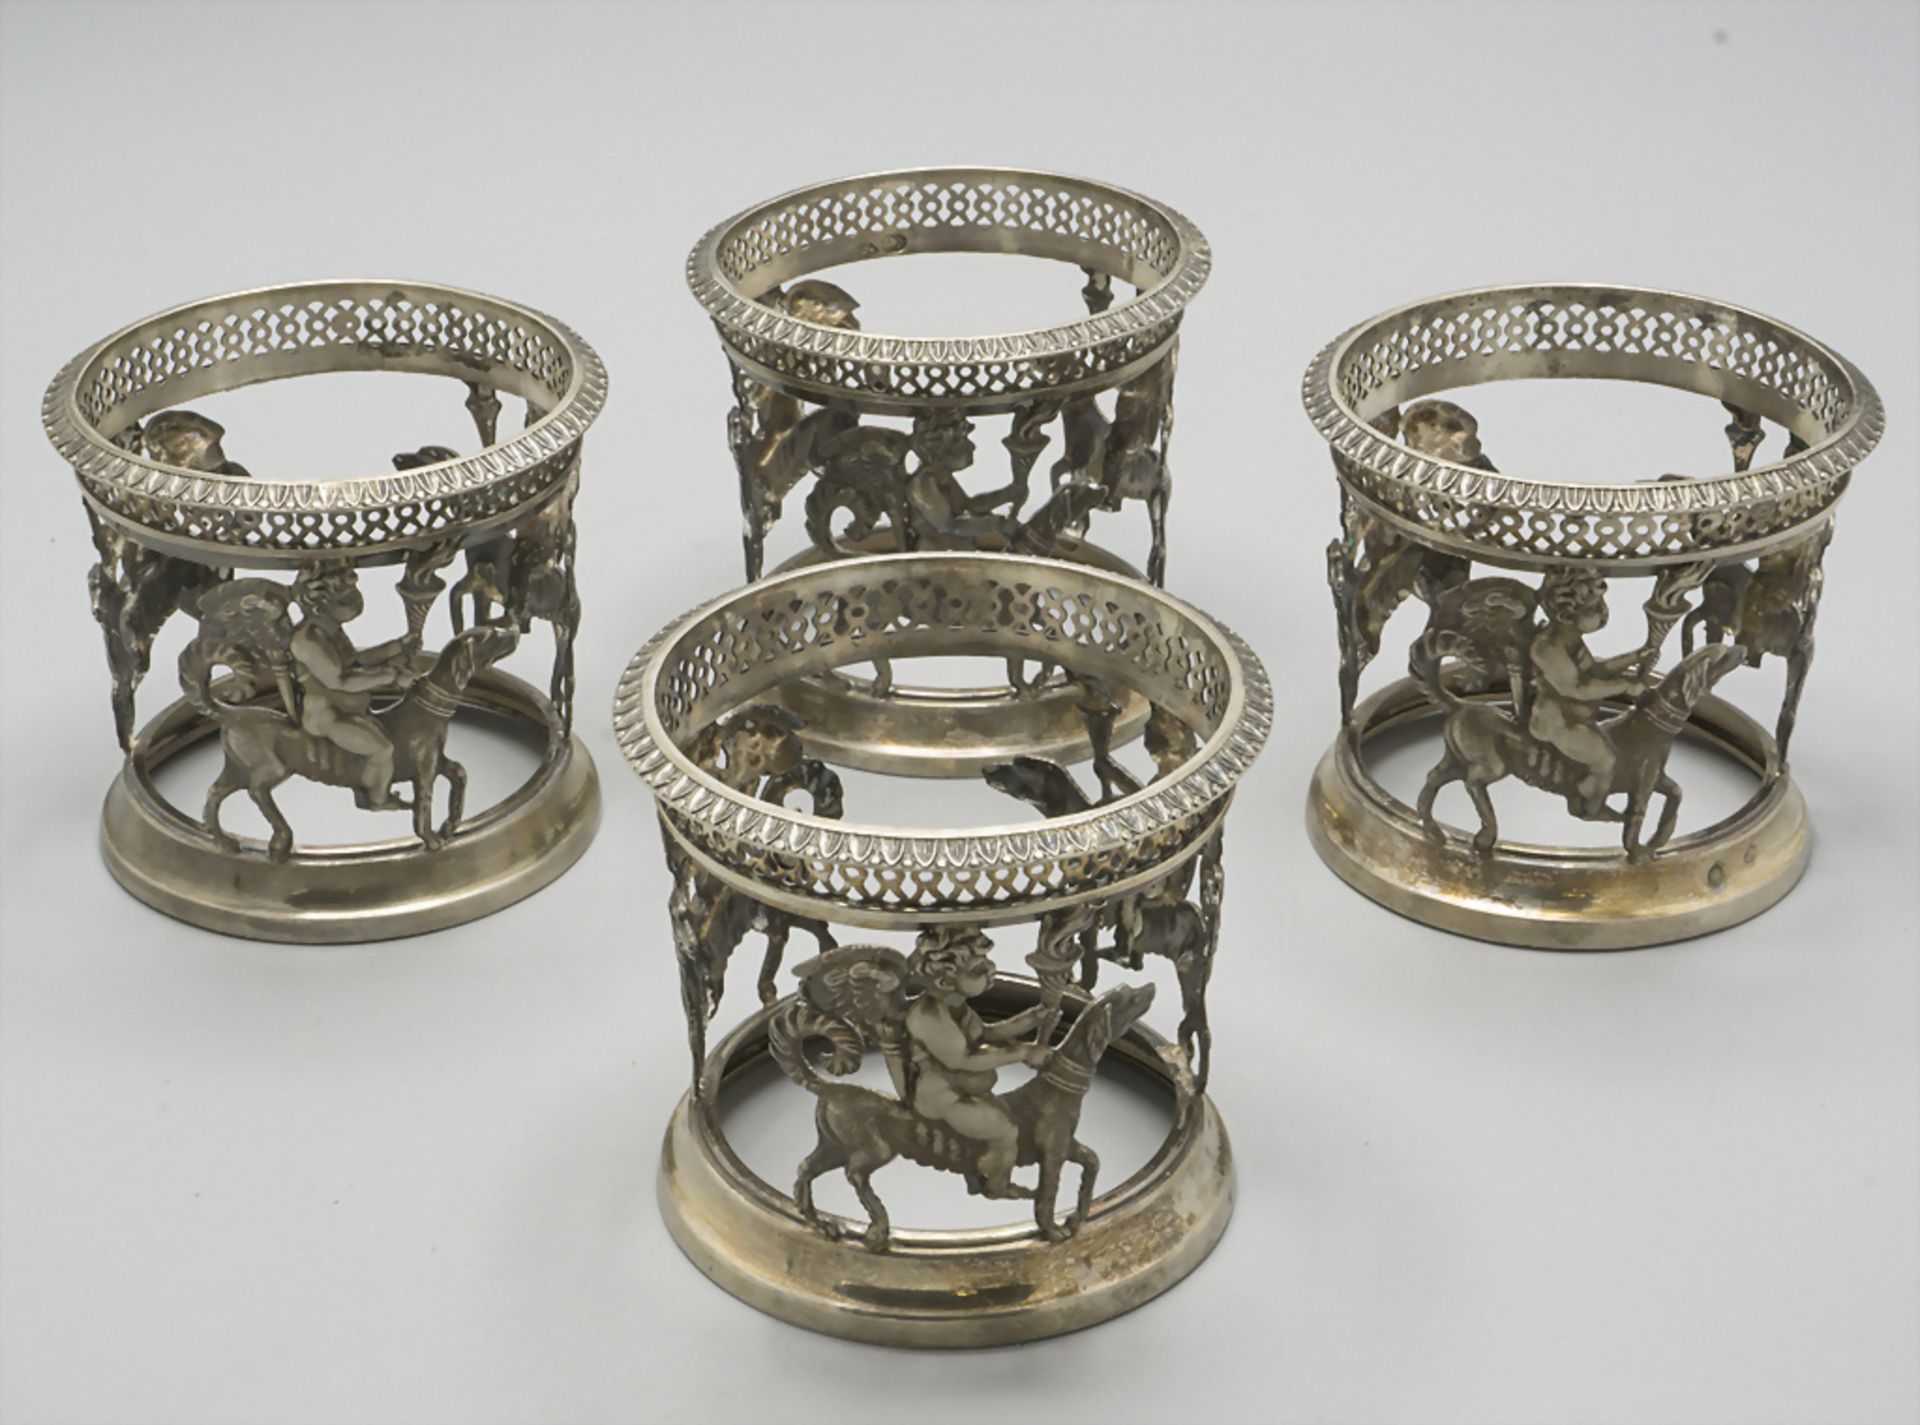 4 Silber Glashalter / A set of 4 silver cup holder, D. Garreau, Paris, 1817-1819